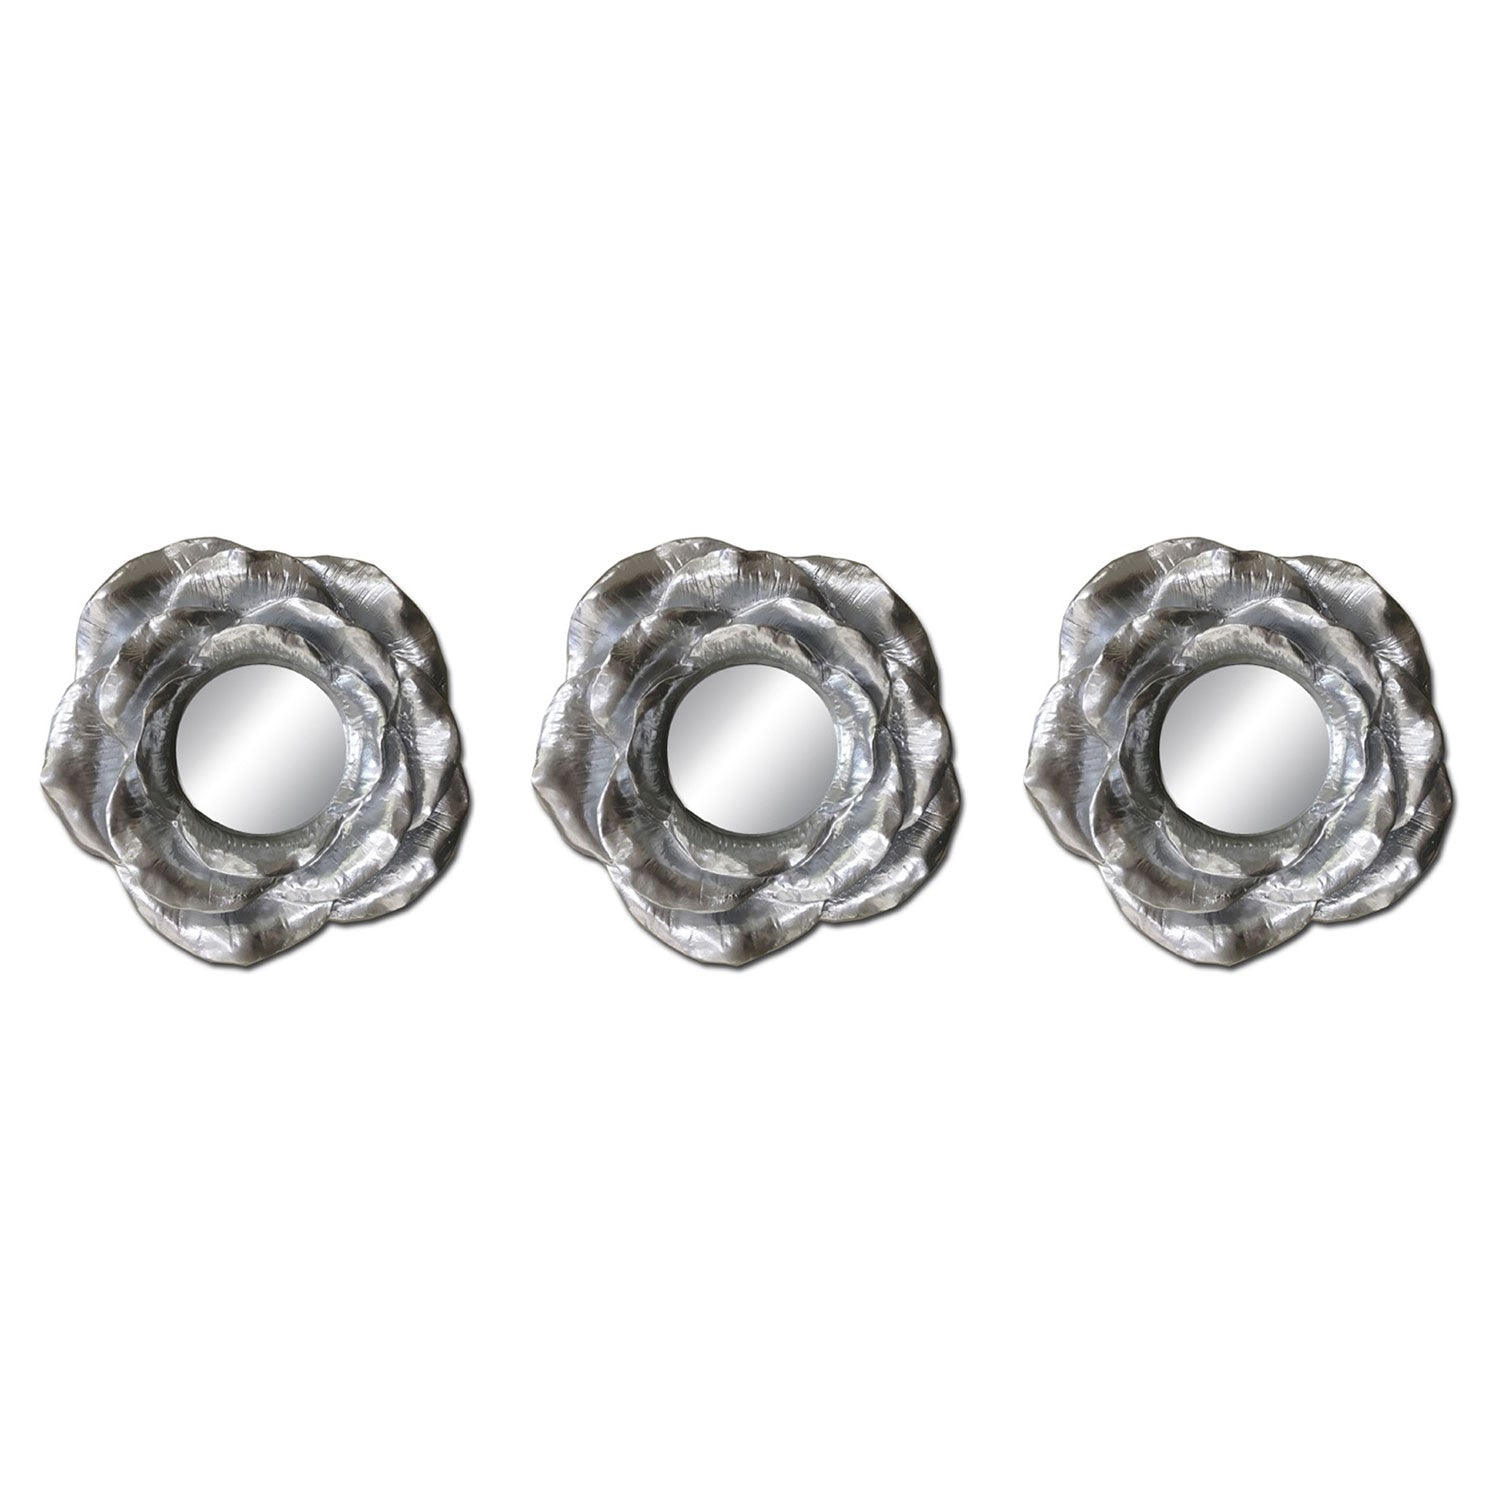 PREMIUS 3 Piece Metallic Resin Floral Mirror Set, Silver, 8 Inches